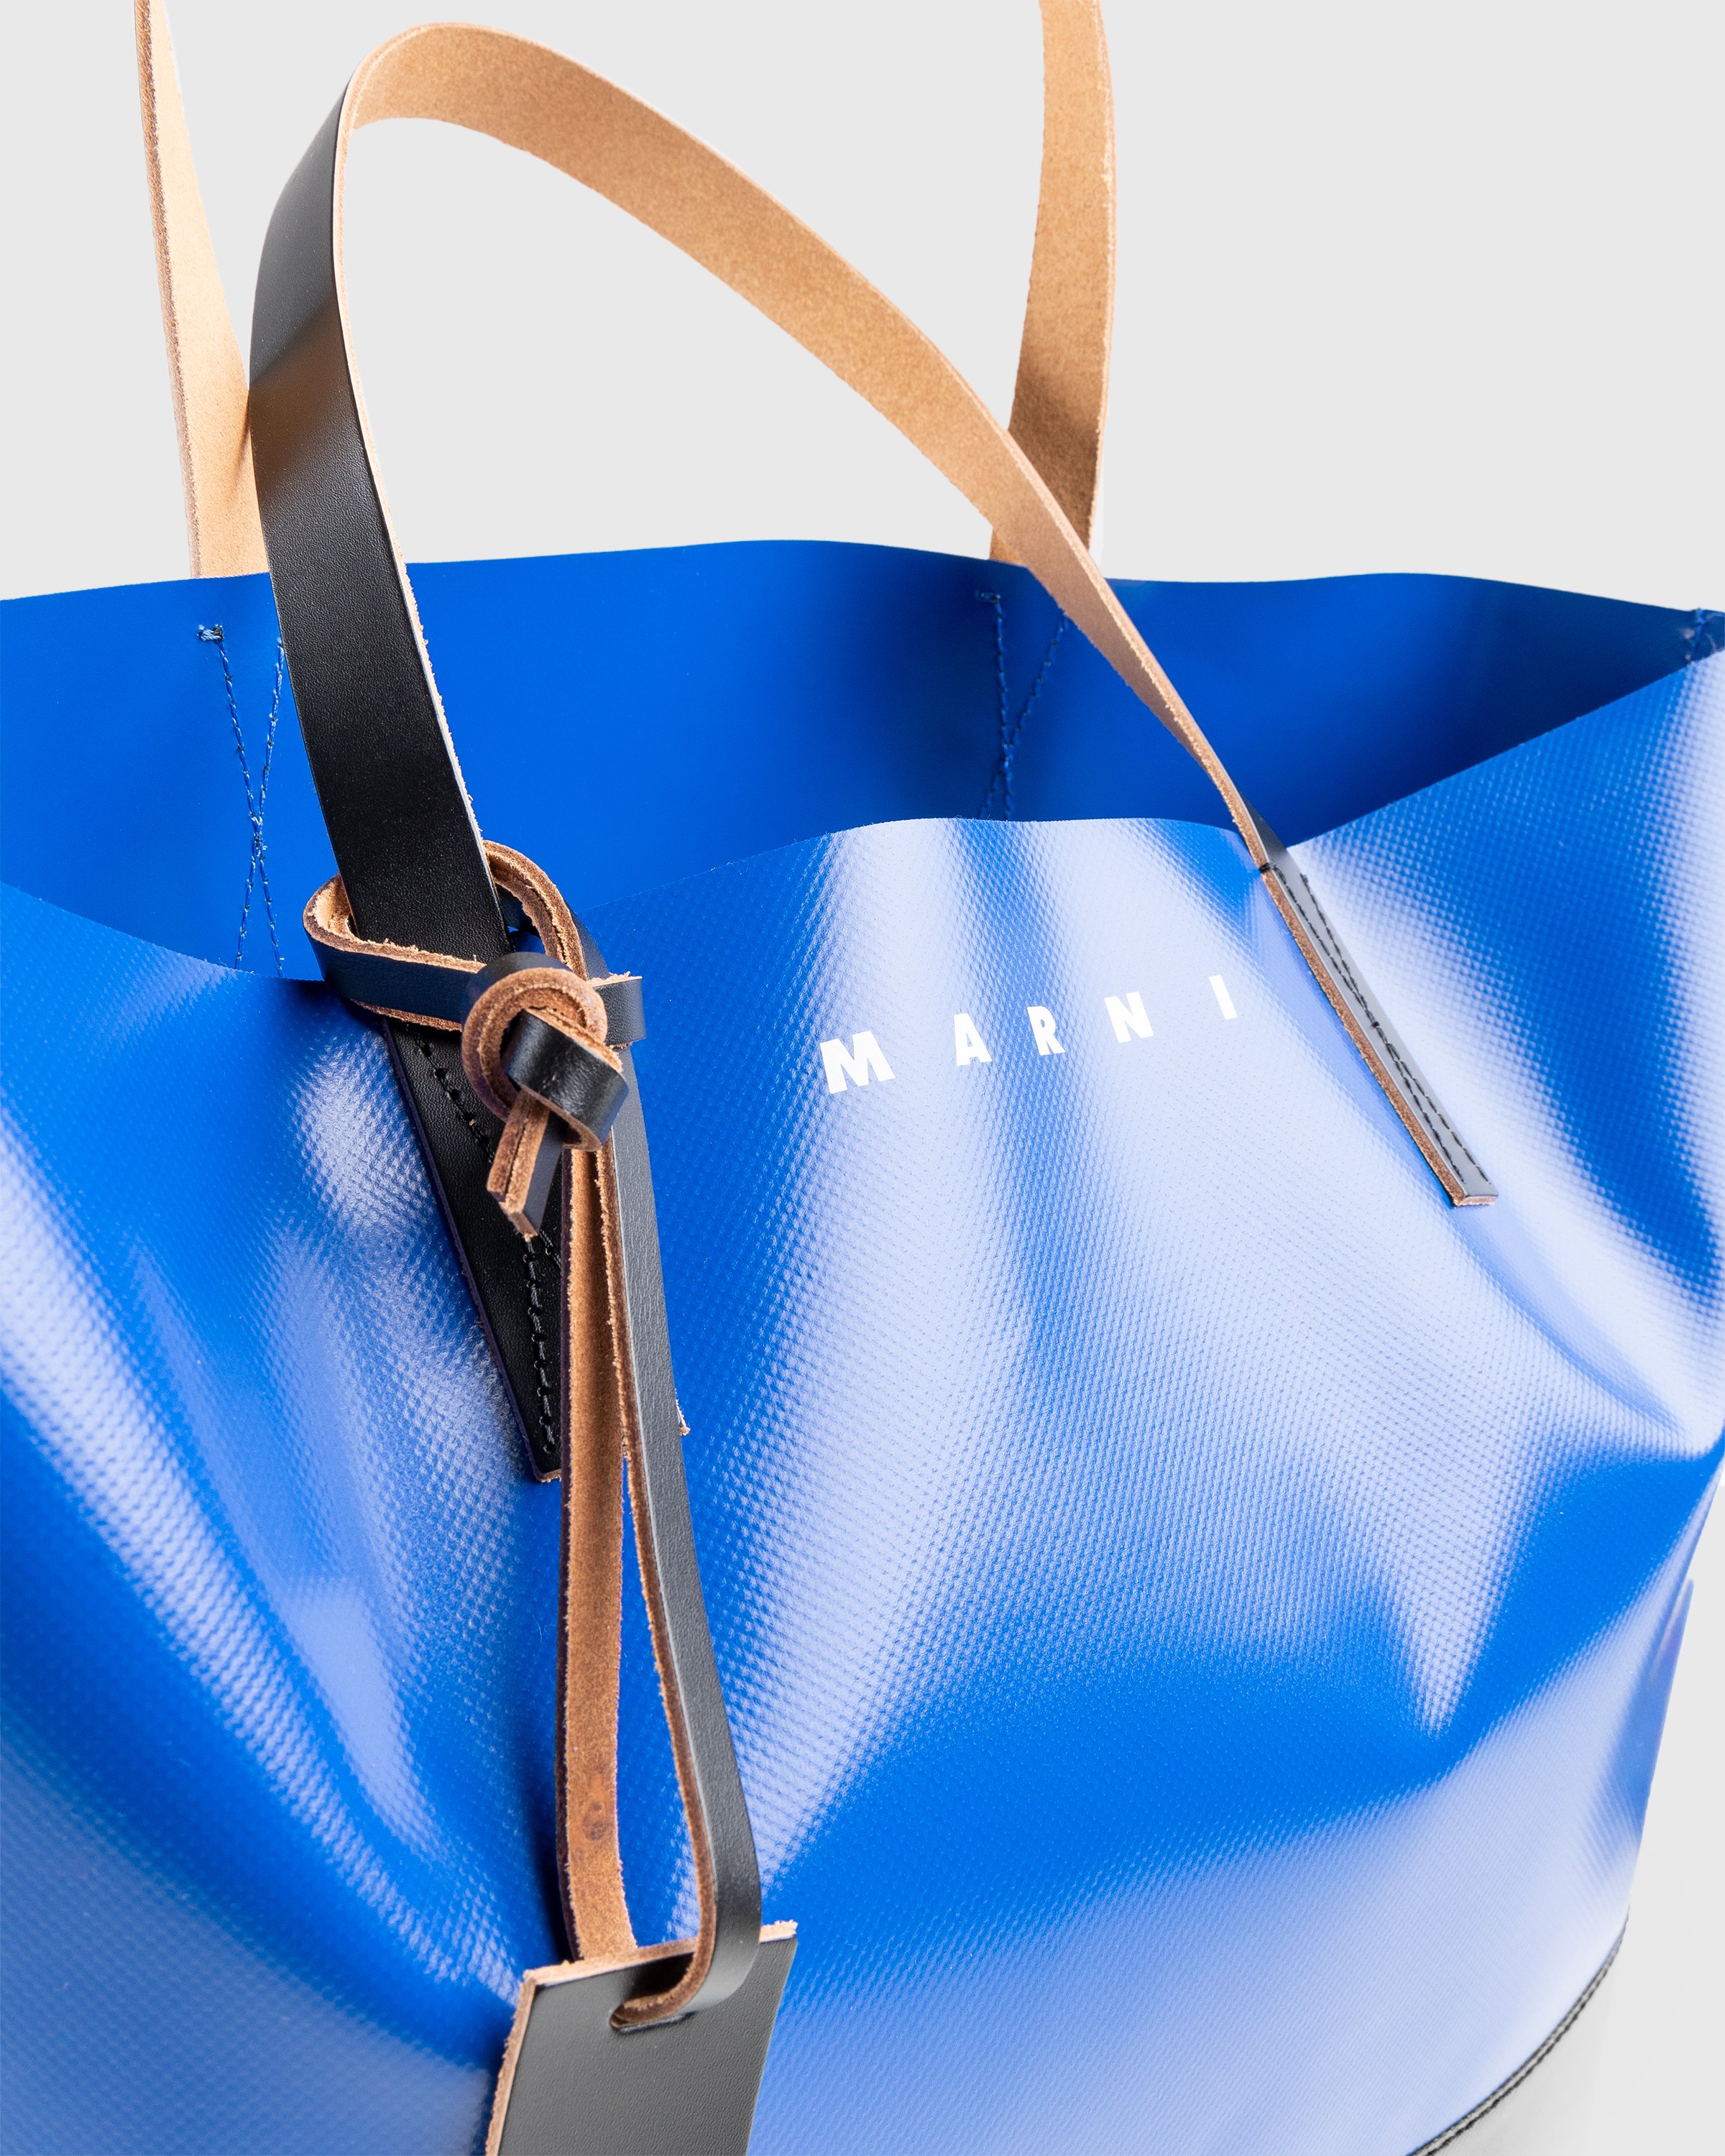 Marni - Tribeca Two-Tone Tote Bag Blue - Accessories - Blue - Image 5